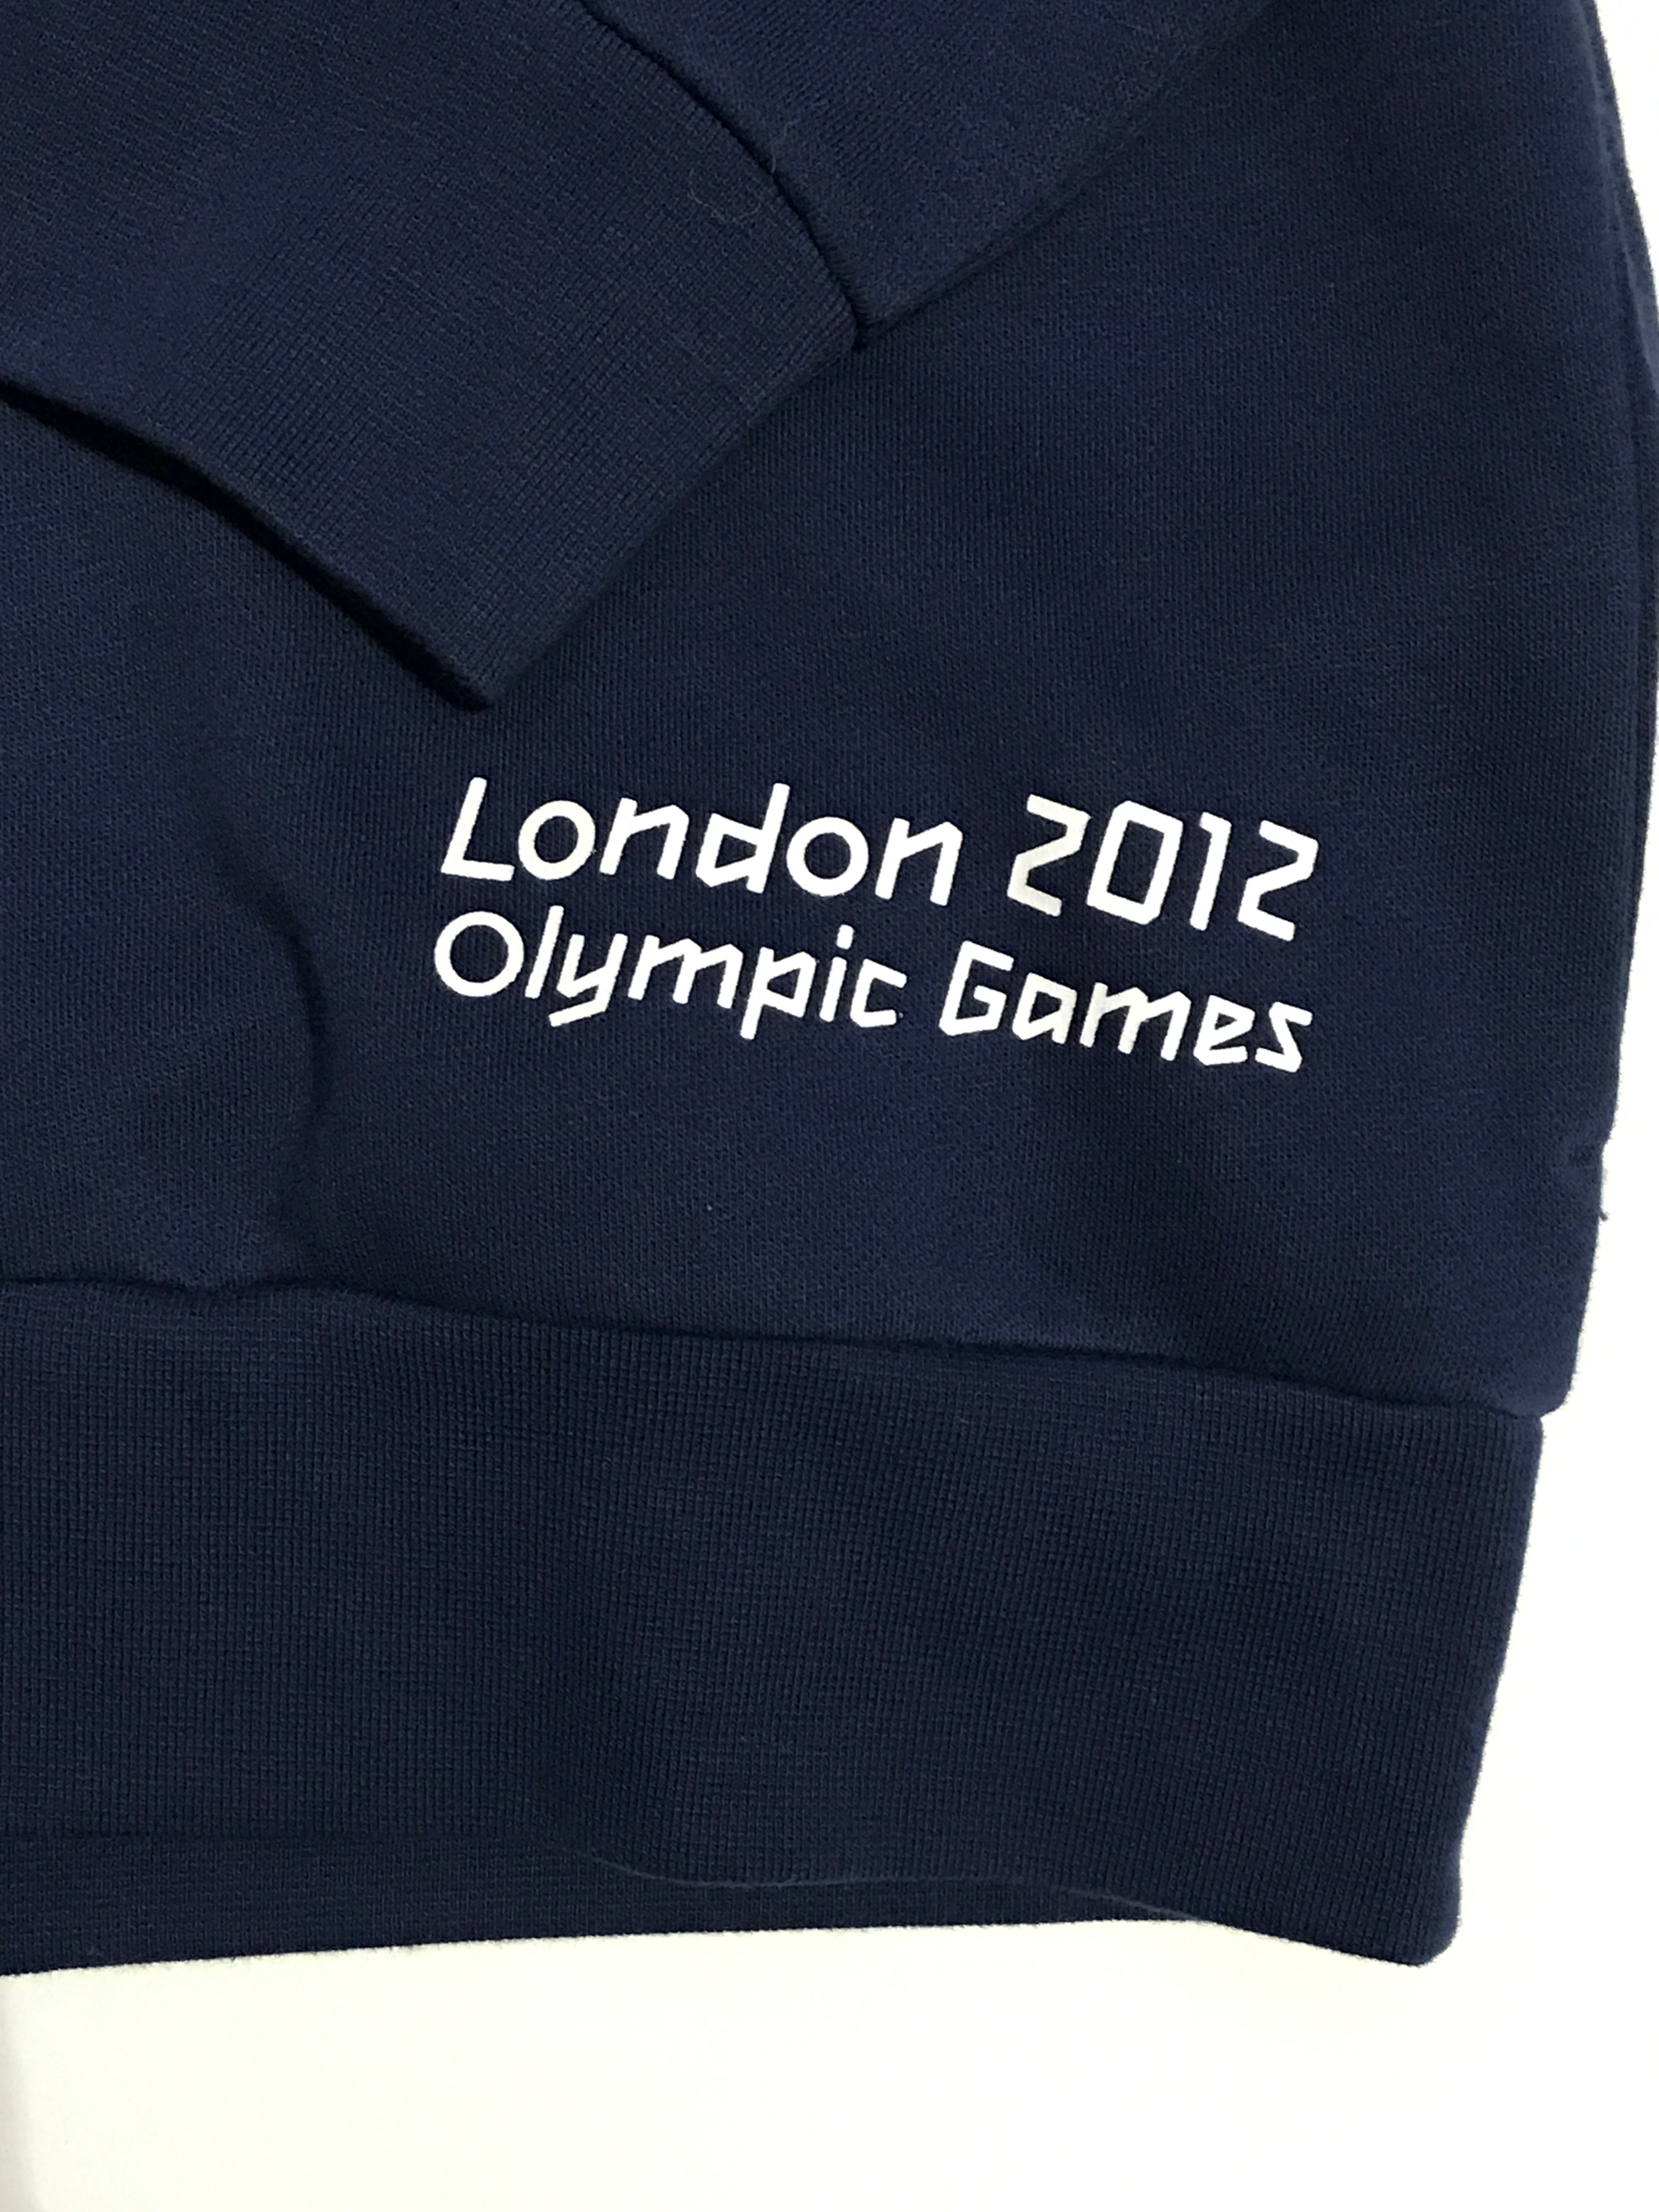 NEW 2012 London Olympics Sweater - XL